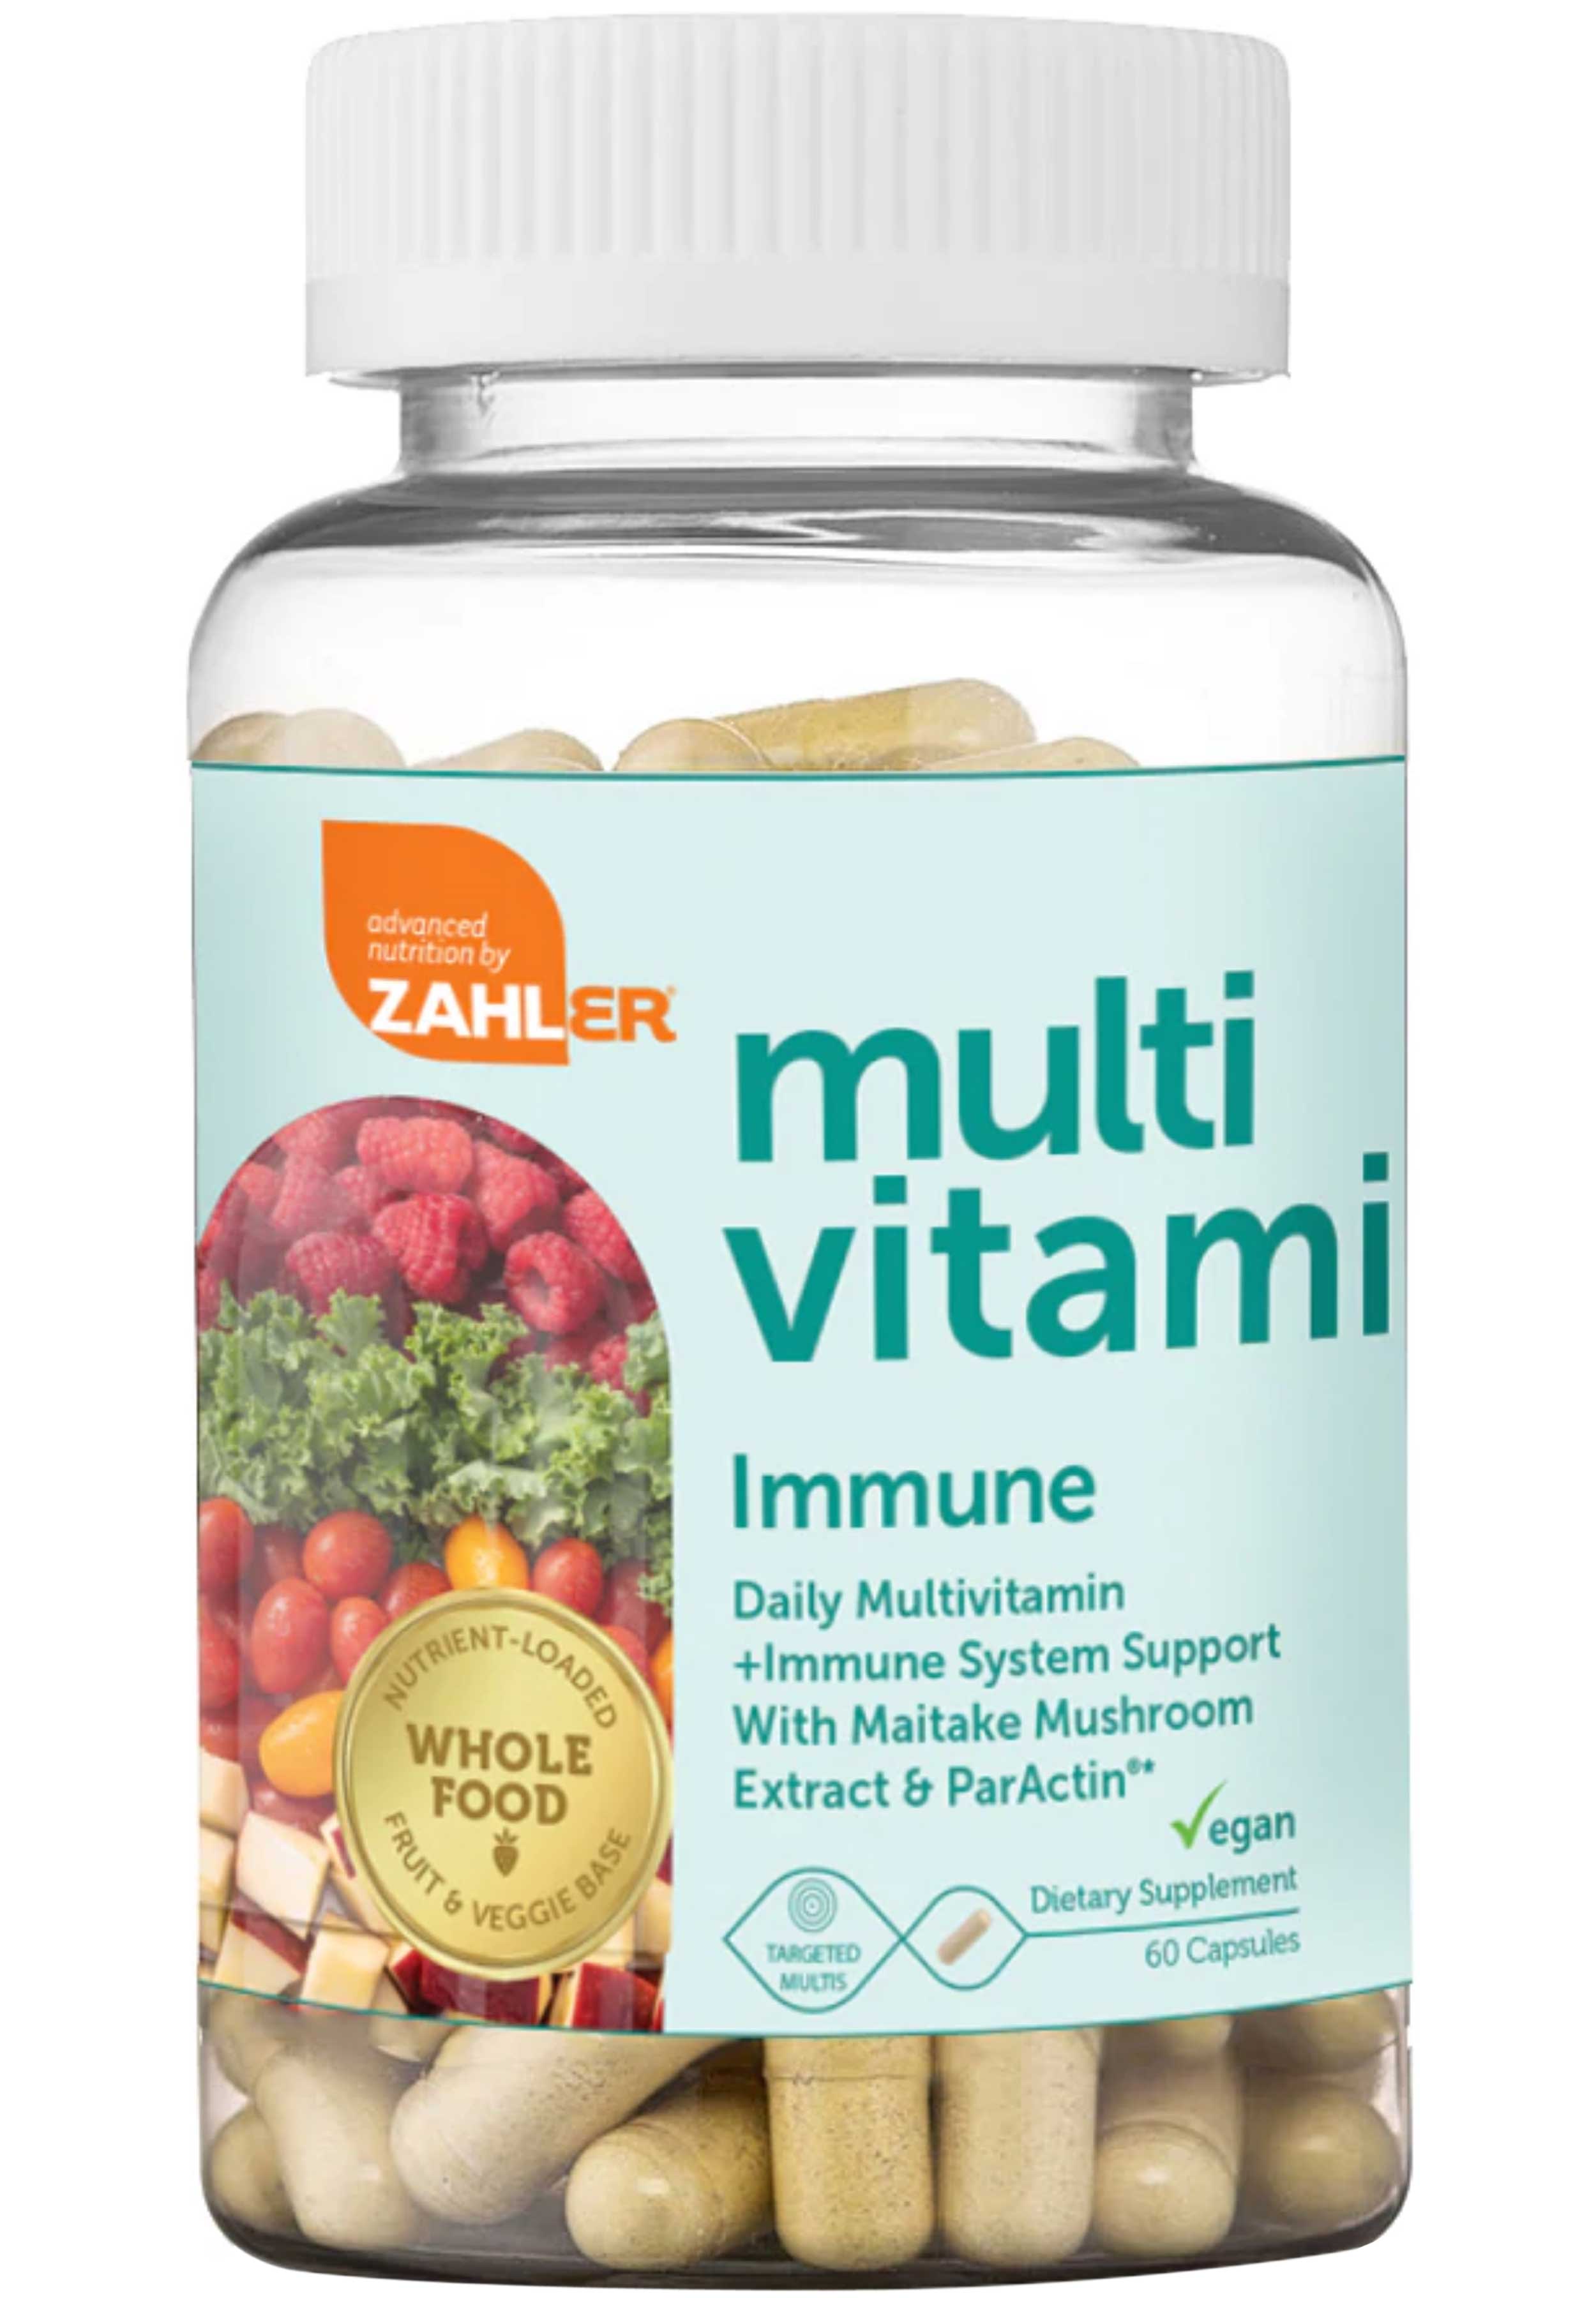 Advanced Nutrition By Zahler Multivitamin Immune